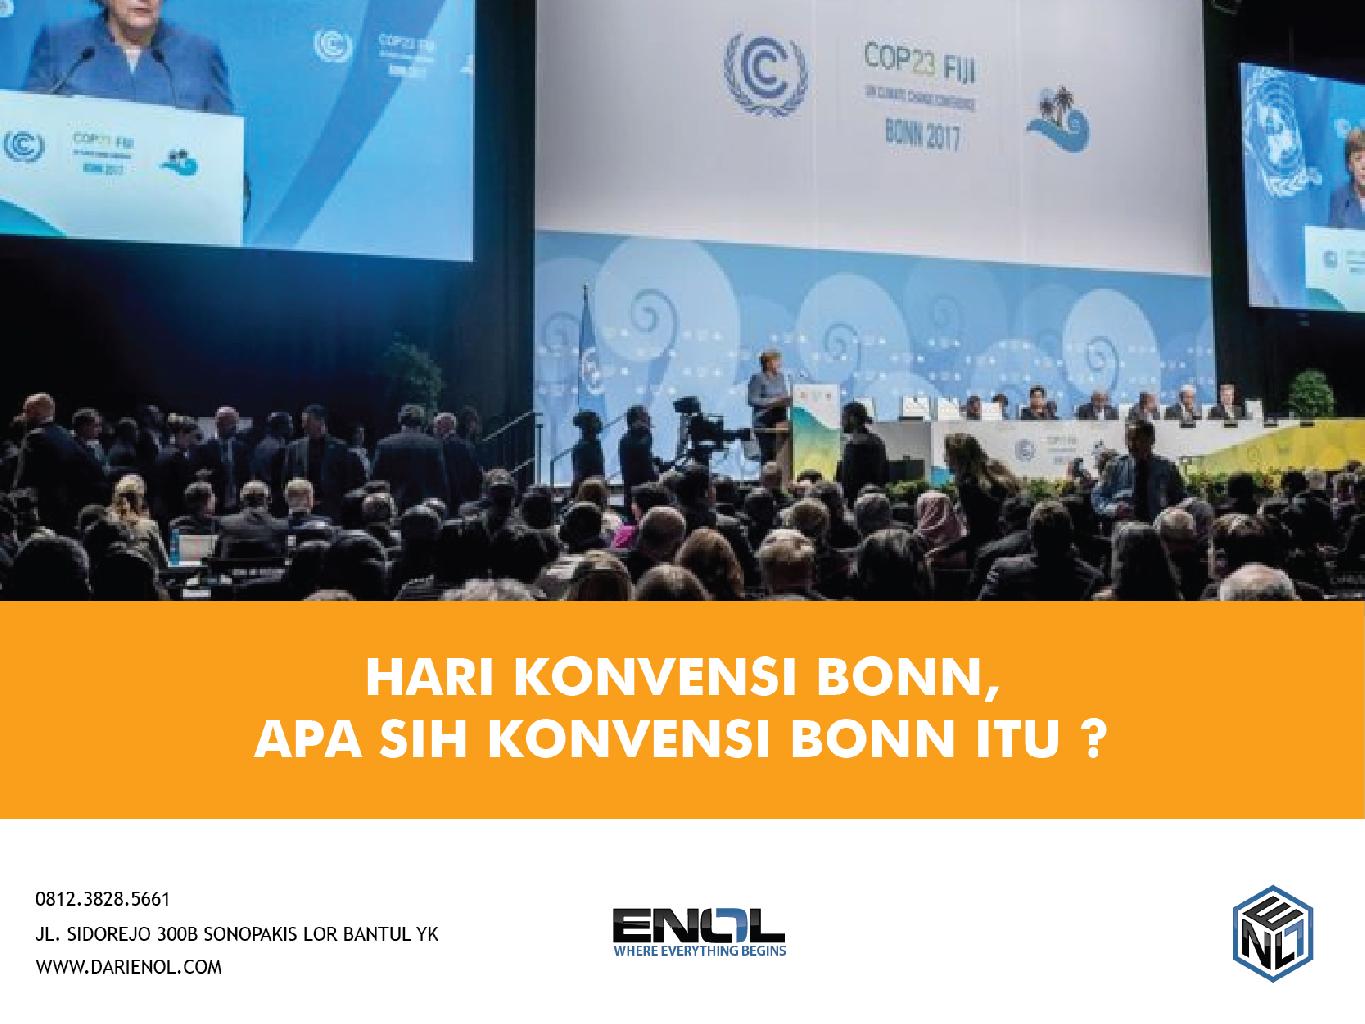 Hari Konvensi Bonn, Apa itu konvnesi bonn?